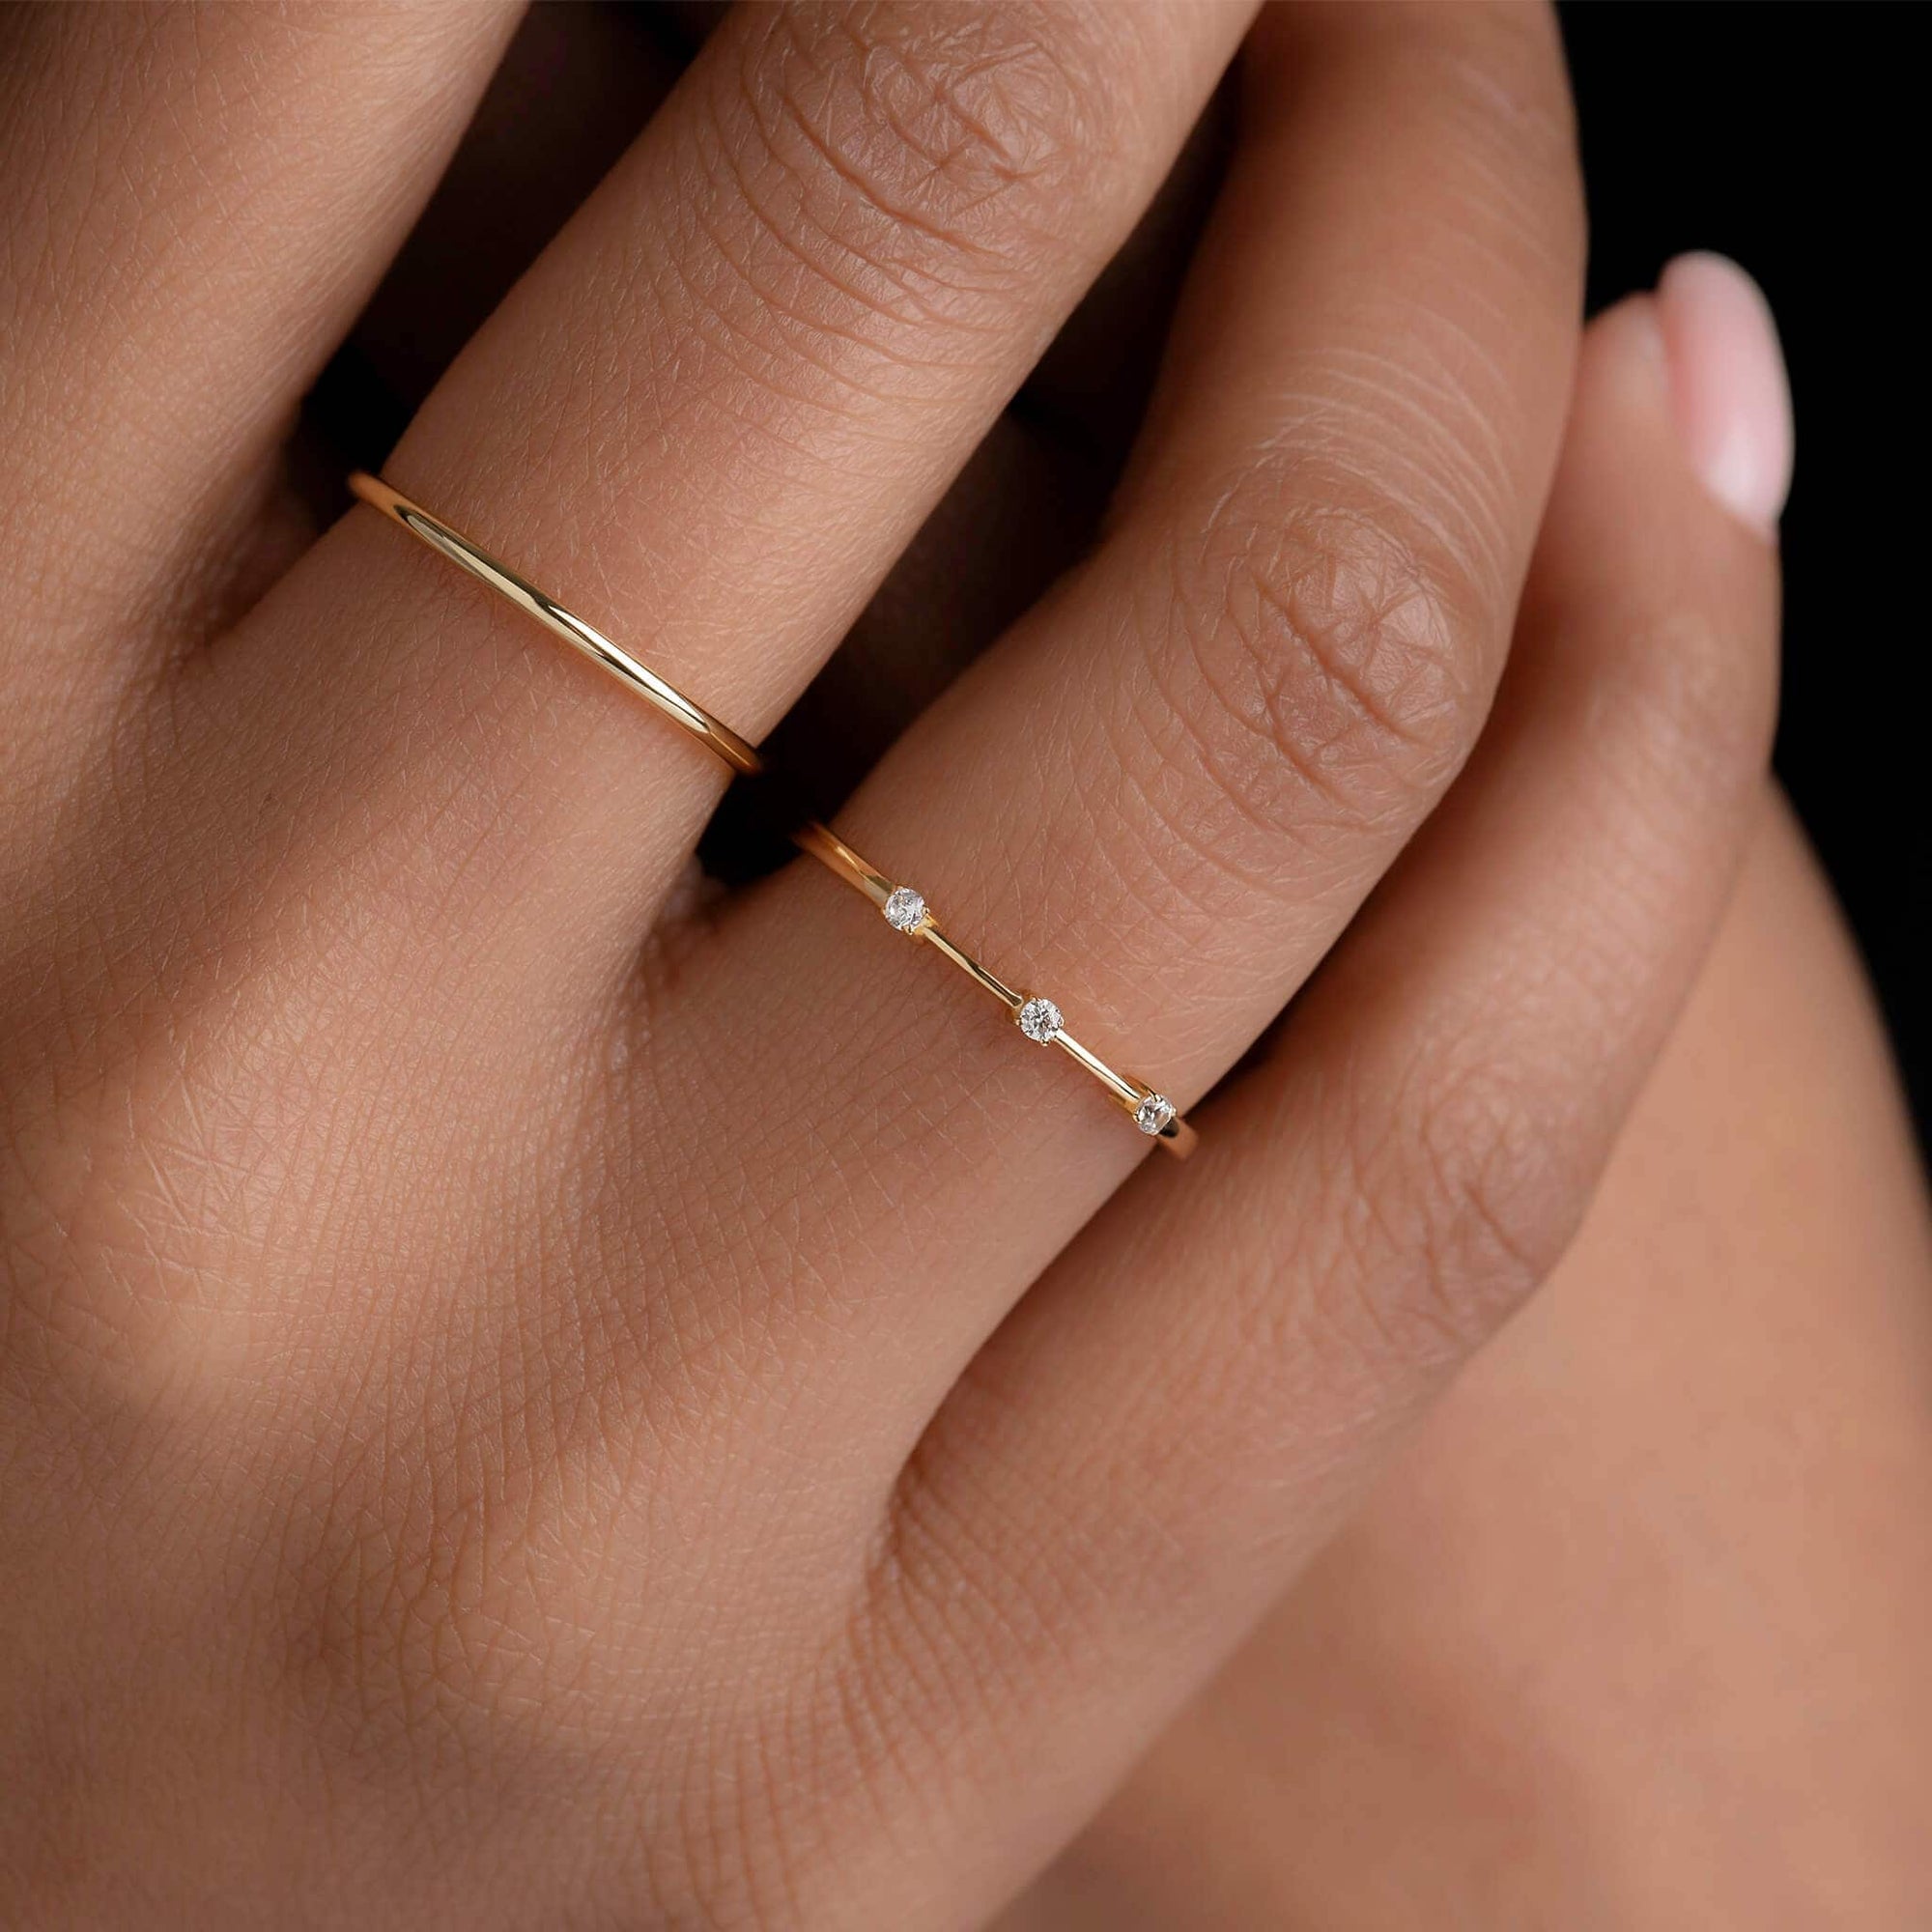 Dainty twig wedding band, solid gold ring | Eden Garden Jewelry™